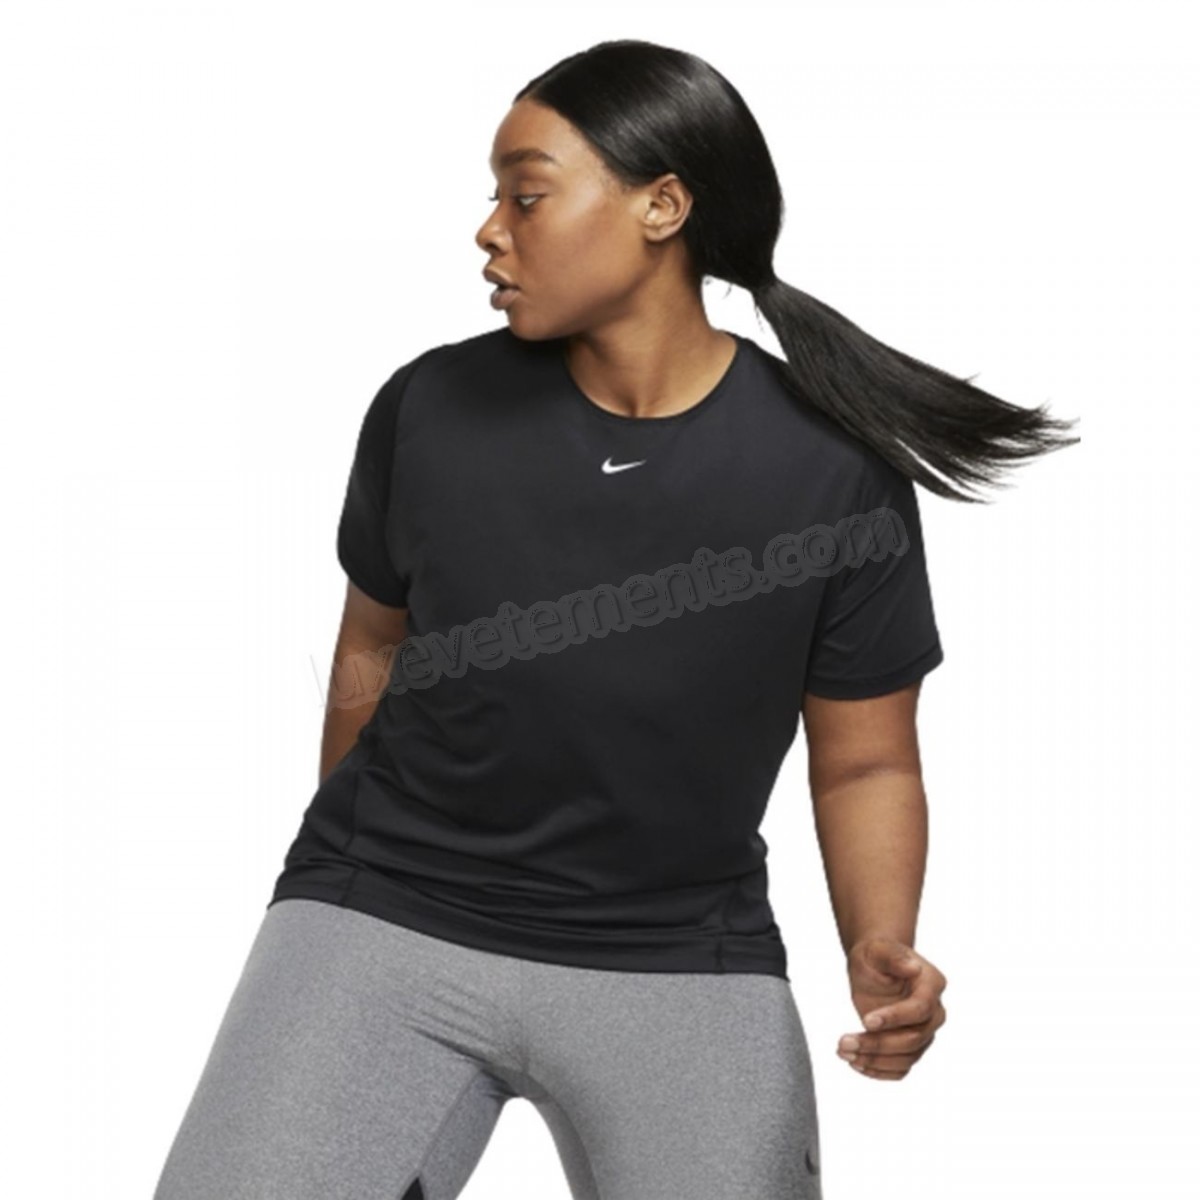 Nike-TEE-SHIRT femme NIKE Nike Pro (grande taille) Vente en ligne - -0